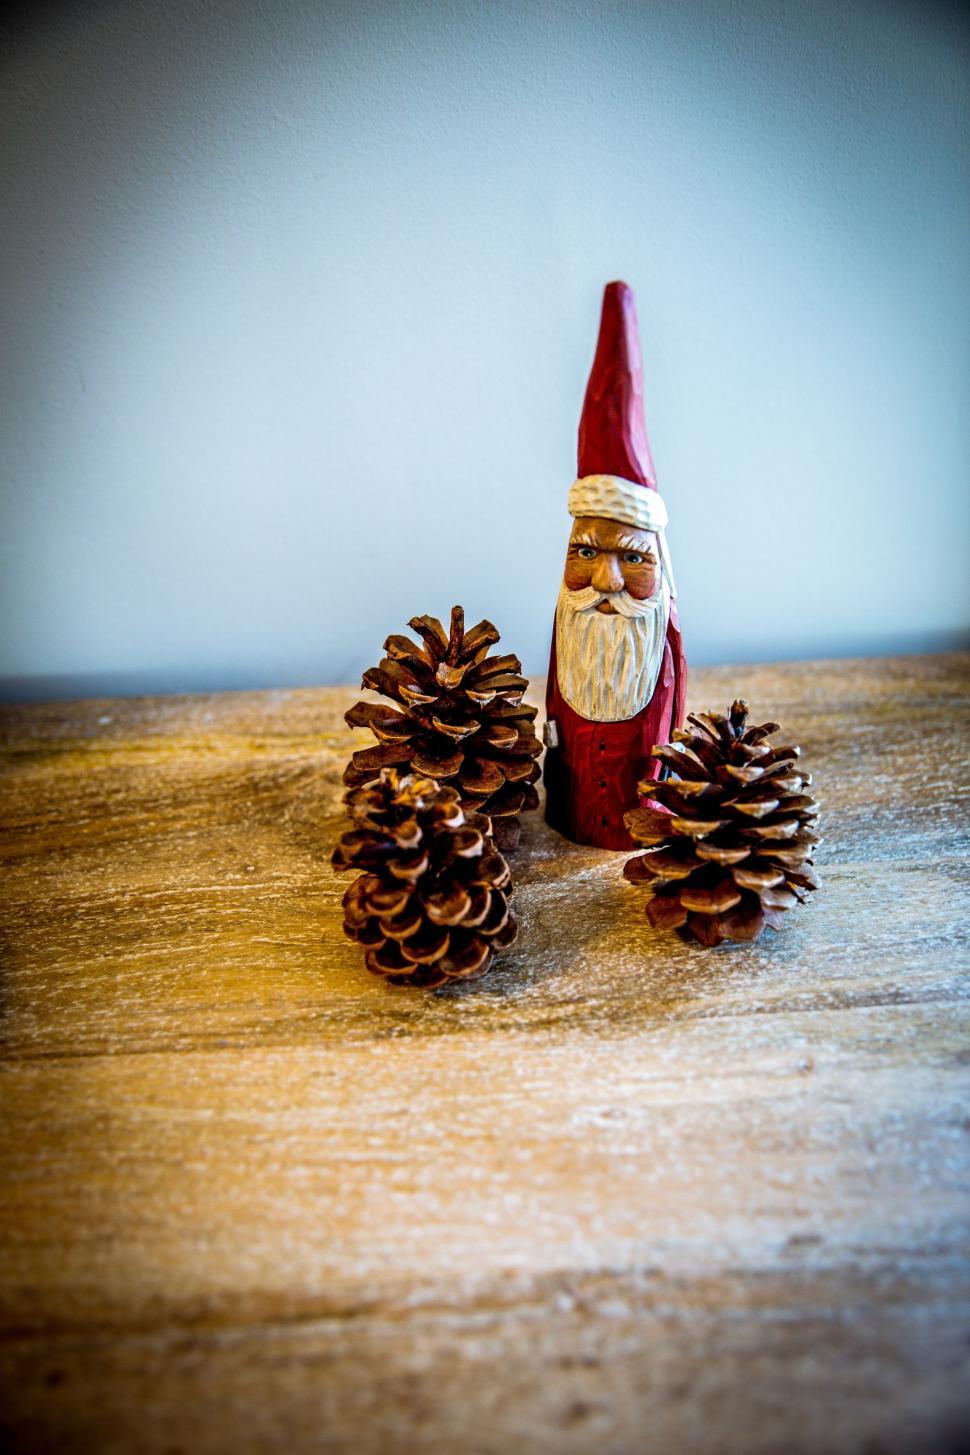 Free Image of Pine Cones and Santa 